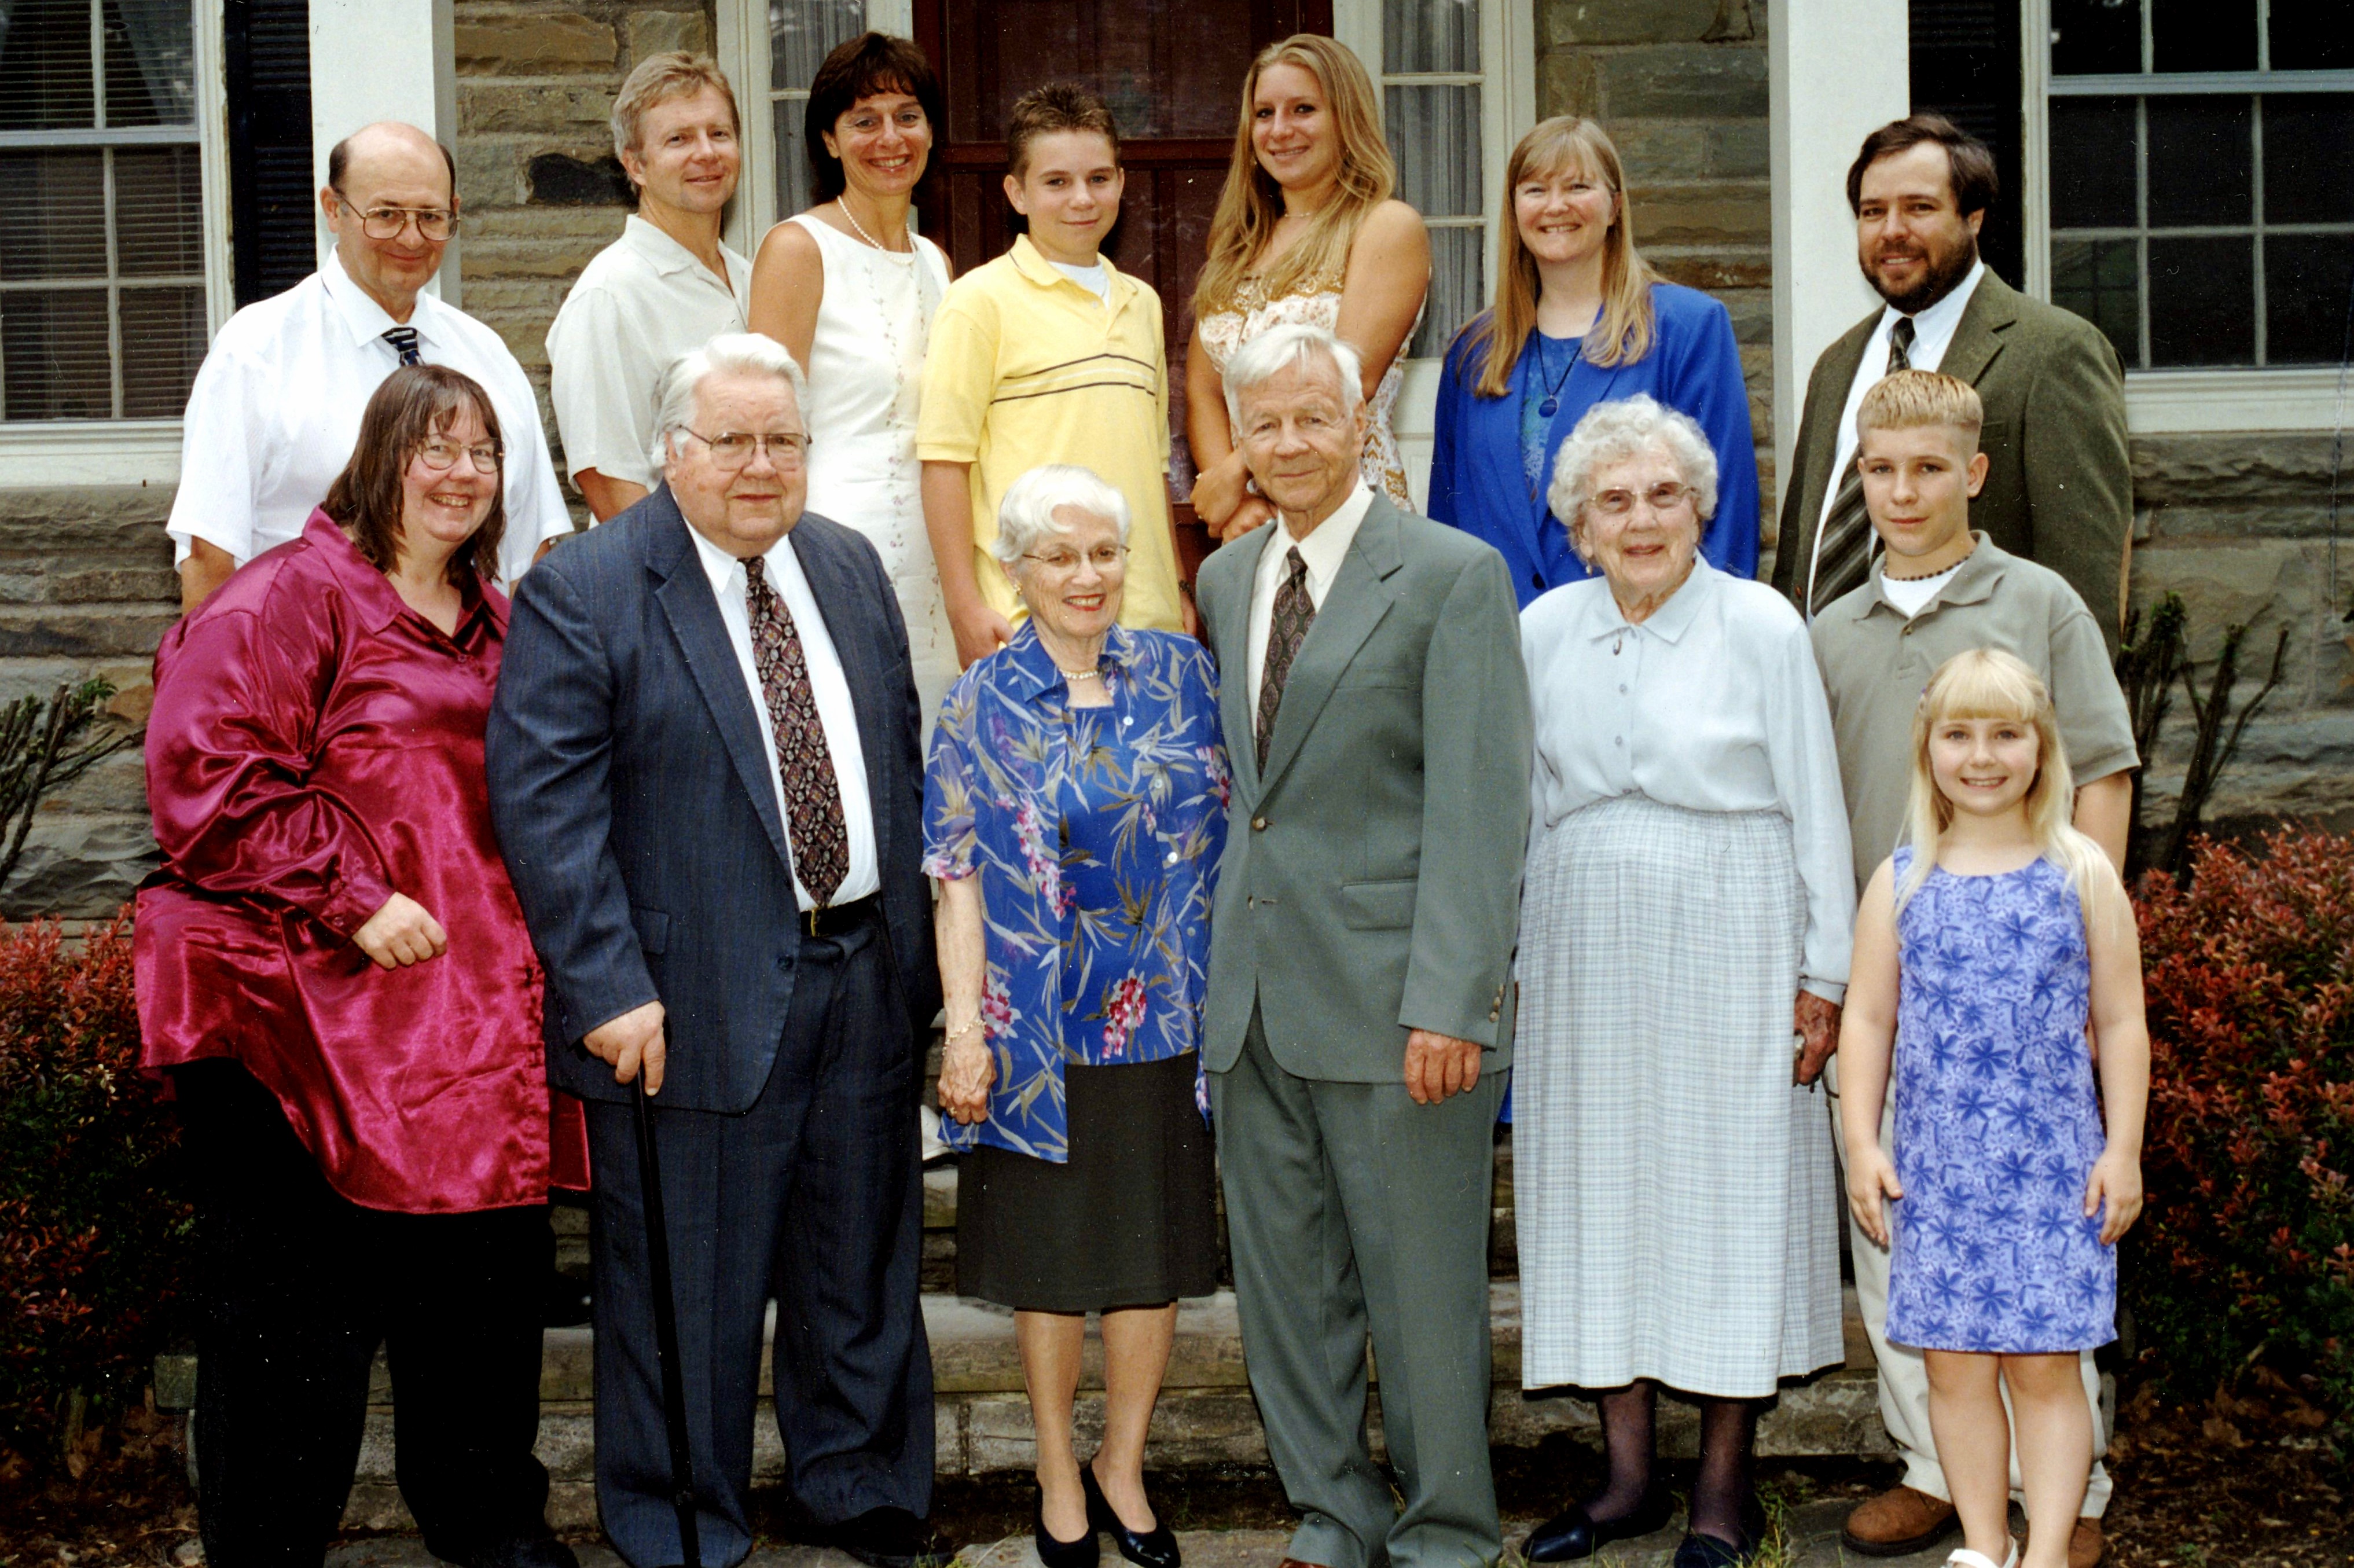 Family Reunion Group Photo - After Vivid-Pix